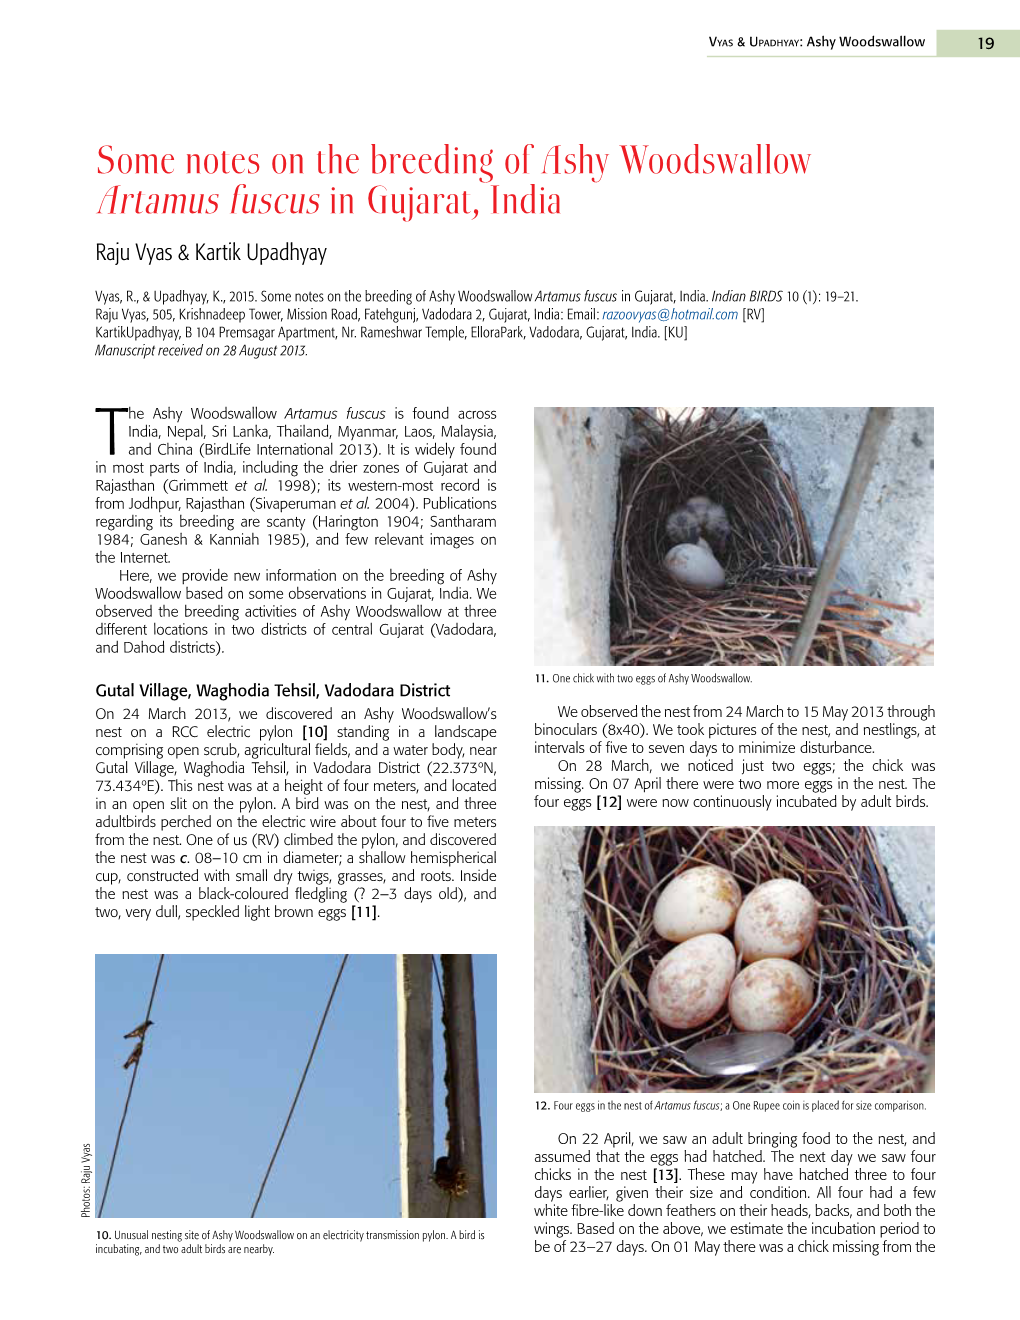 Some Notes on the Breeding of Ashy Woodswallow Artamus Fuscus in Gujarat, India Raju Vyas & Kartik Upadhyay